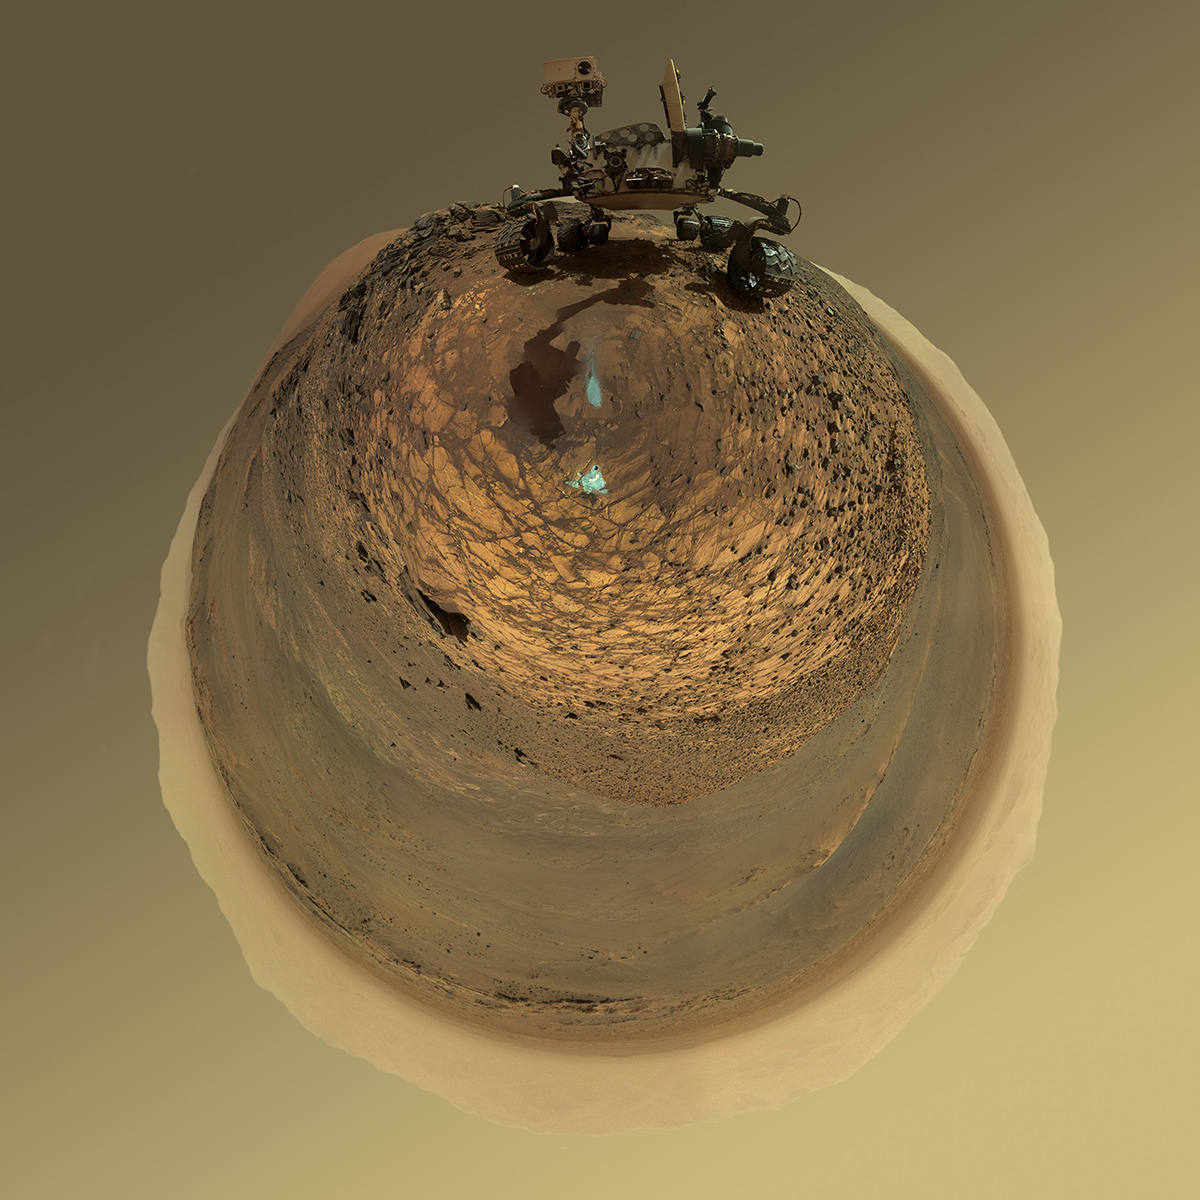 Round-Horizon Version of Curiosity's Low-Angle Selfie at 'Buckskin'